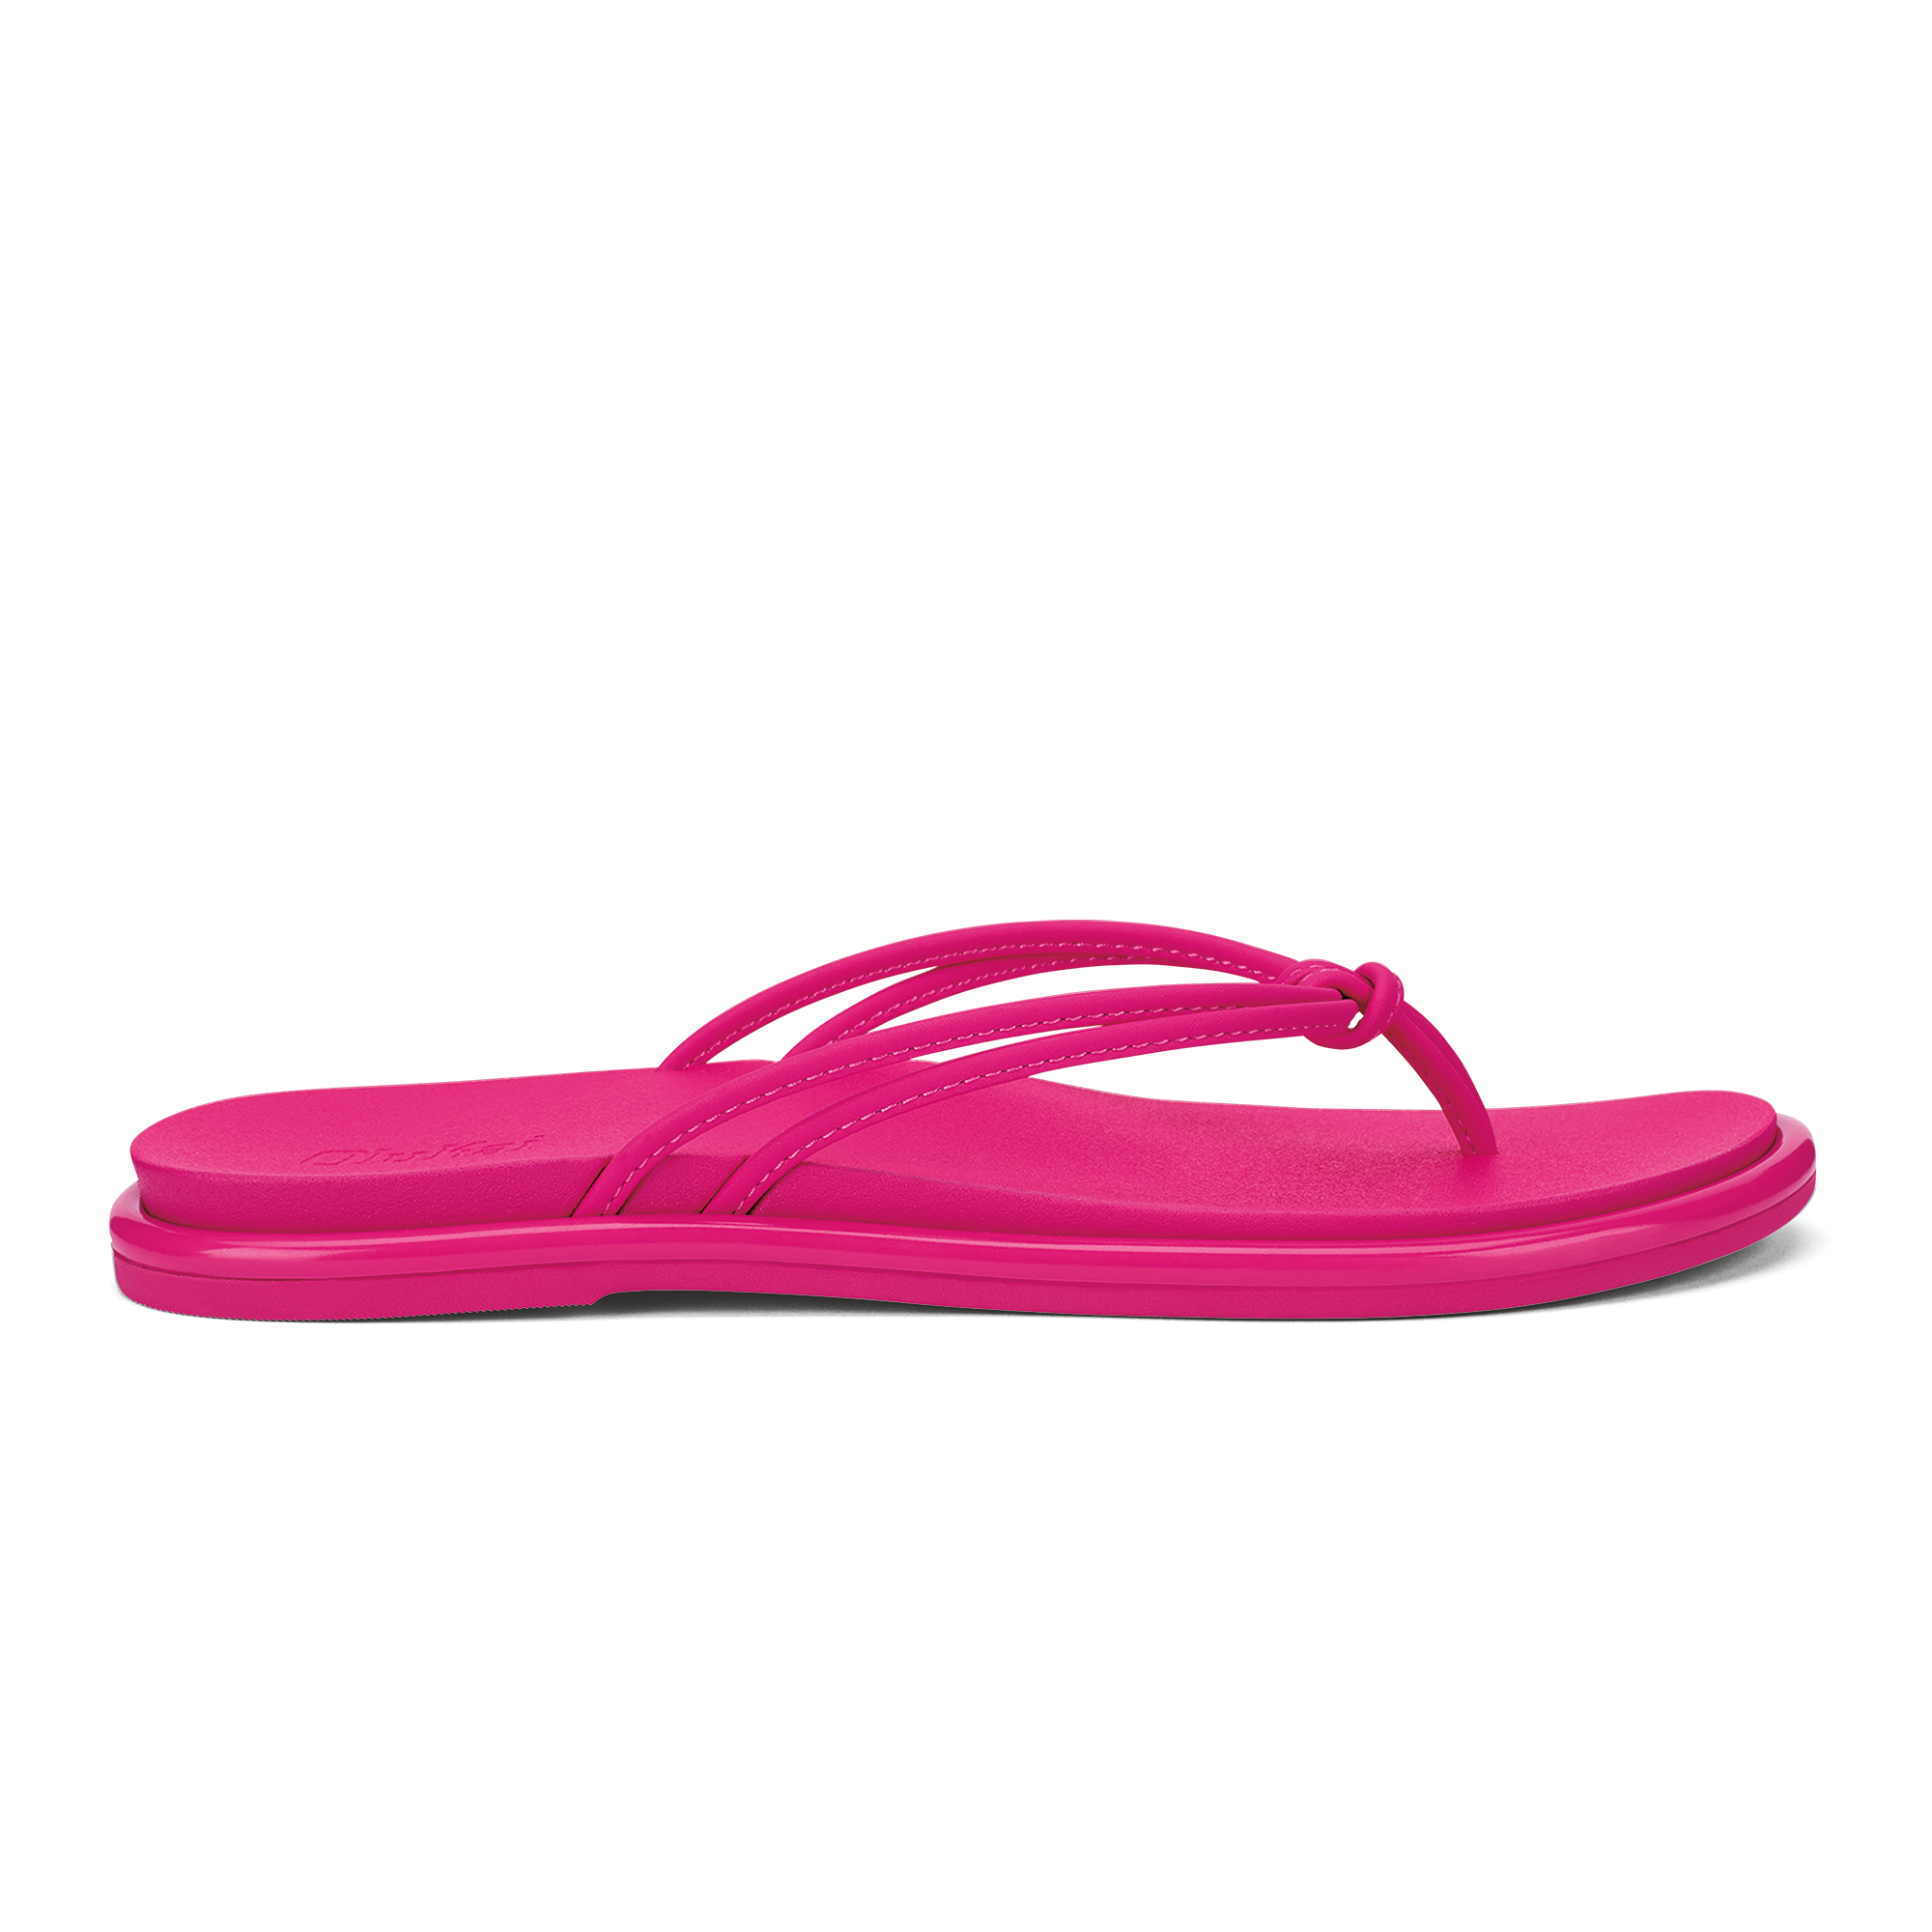 Ladies Light Pink Flip Flop Slipper at Rs 125/pair